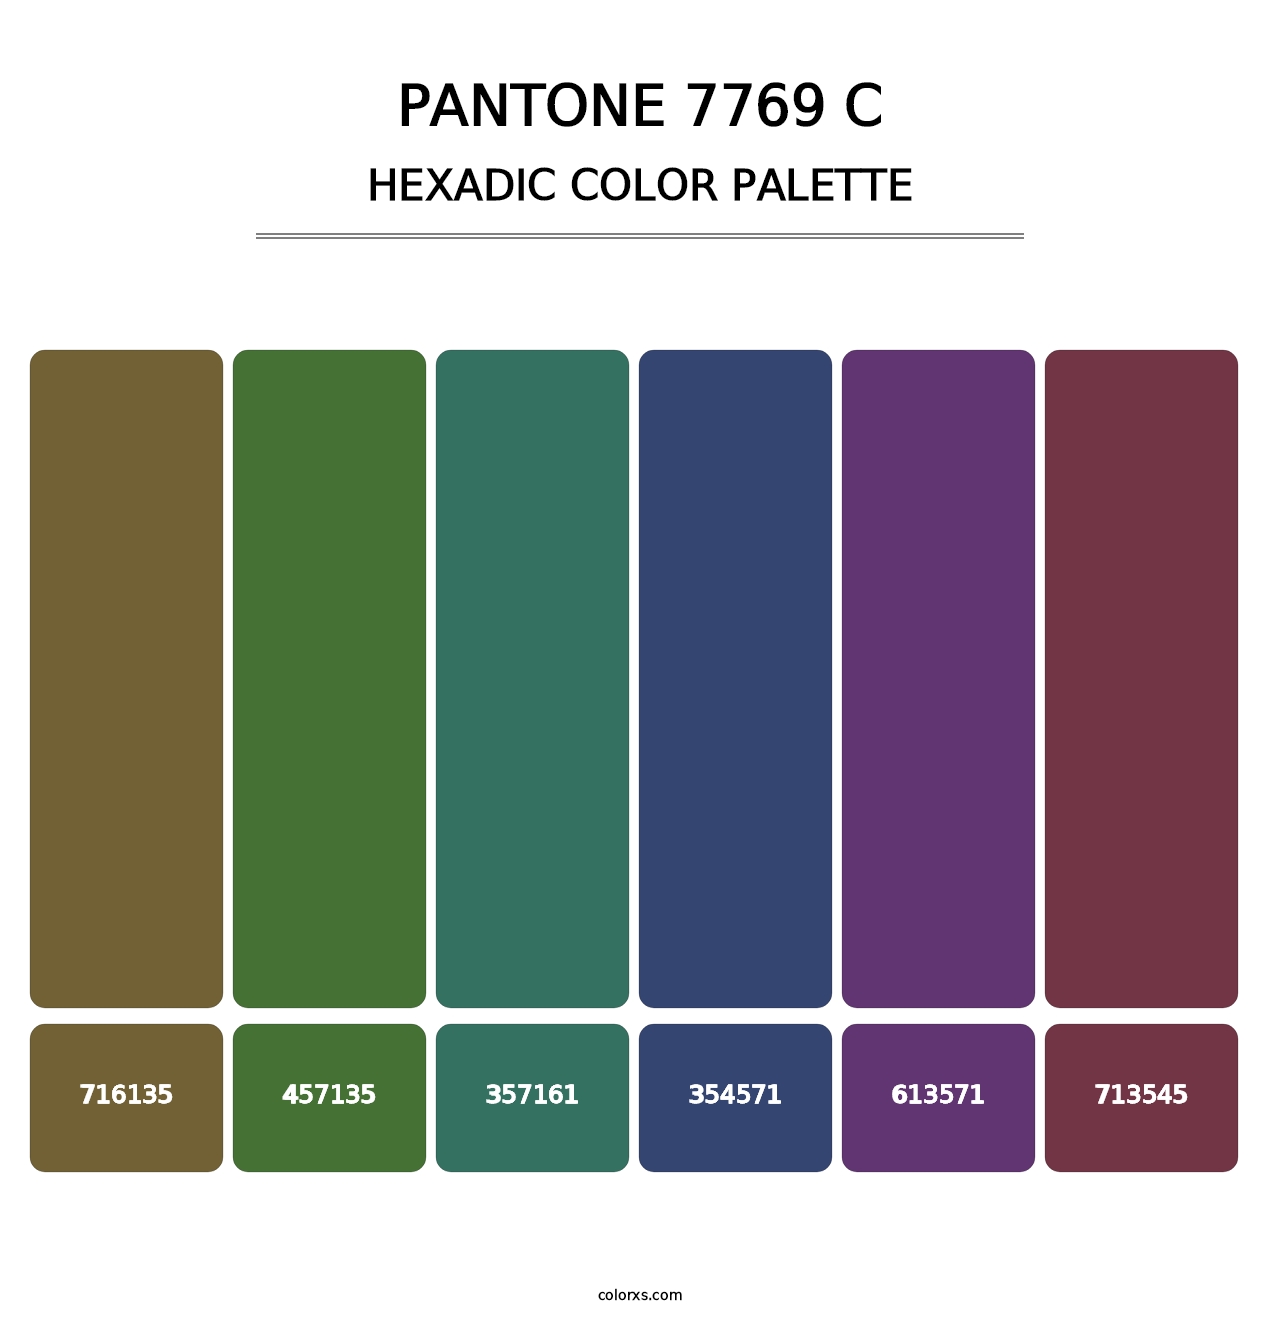 PANTONE 7769 C - Hexadic Color Palette